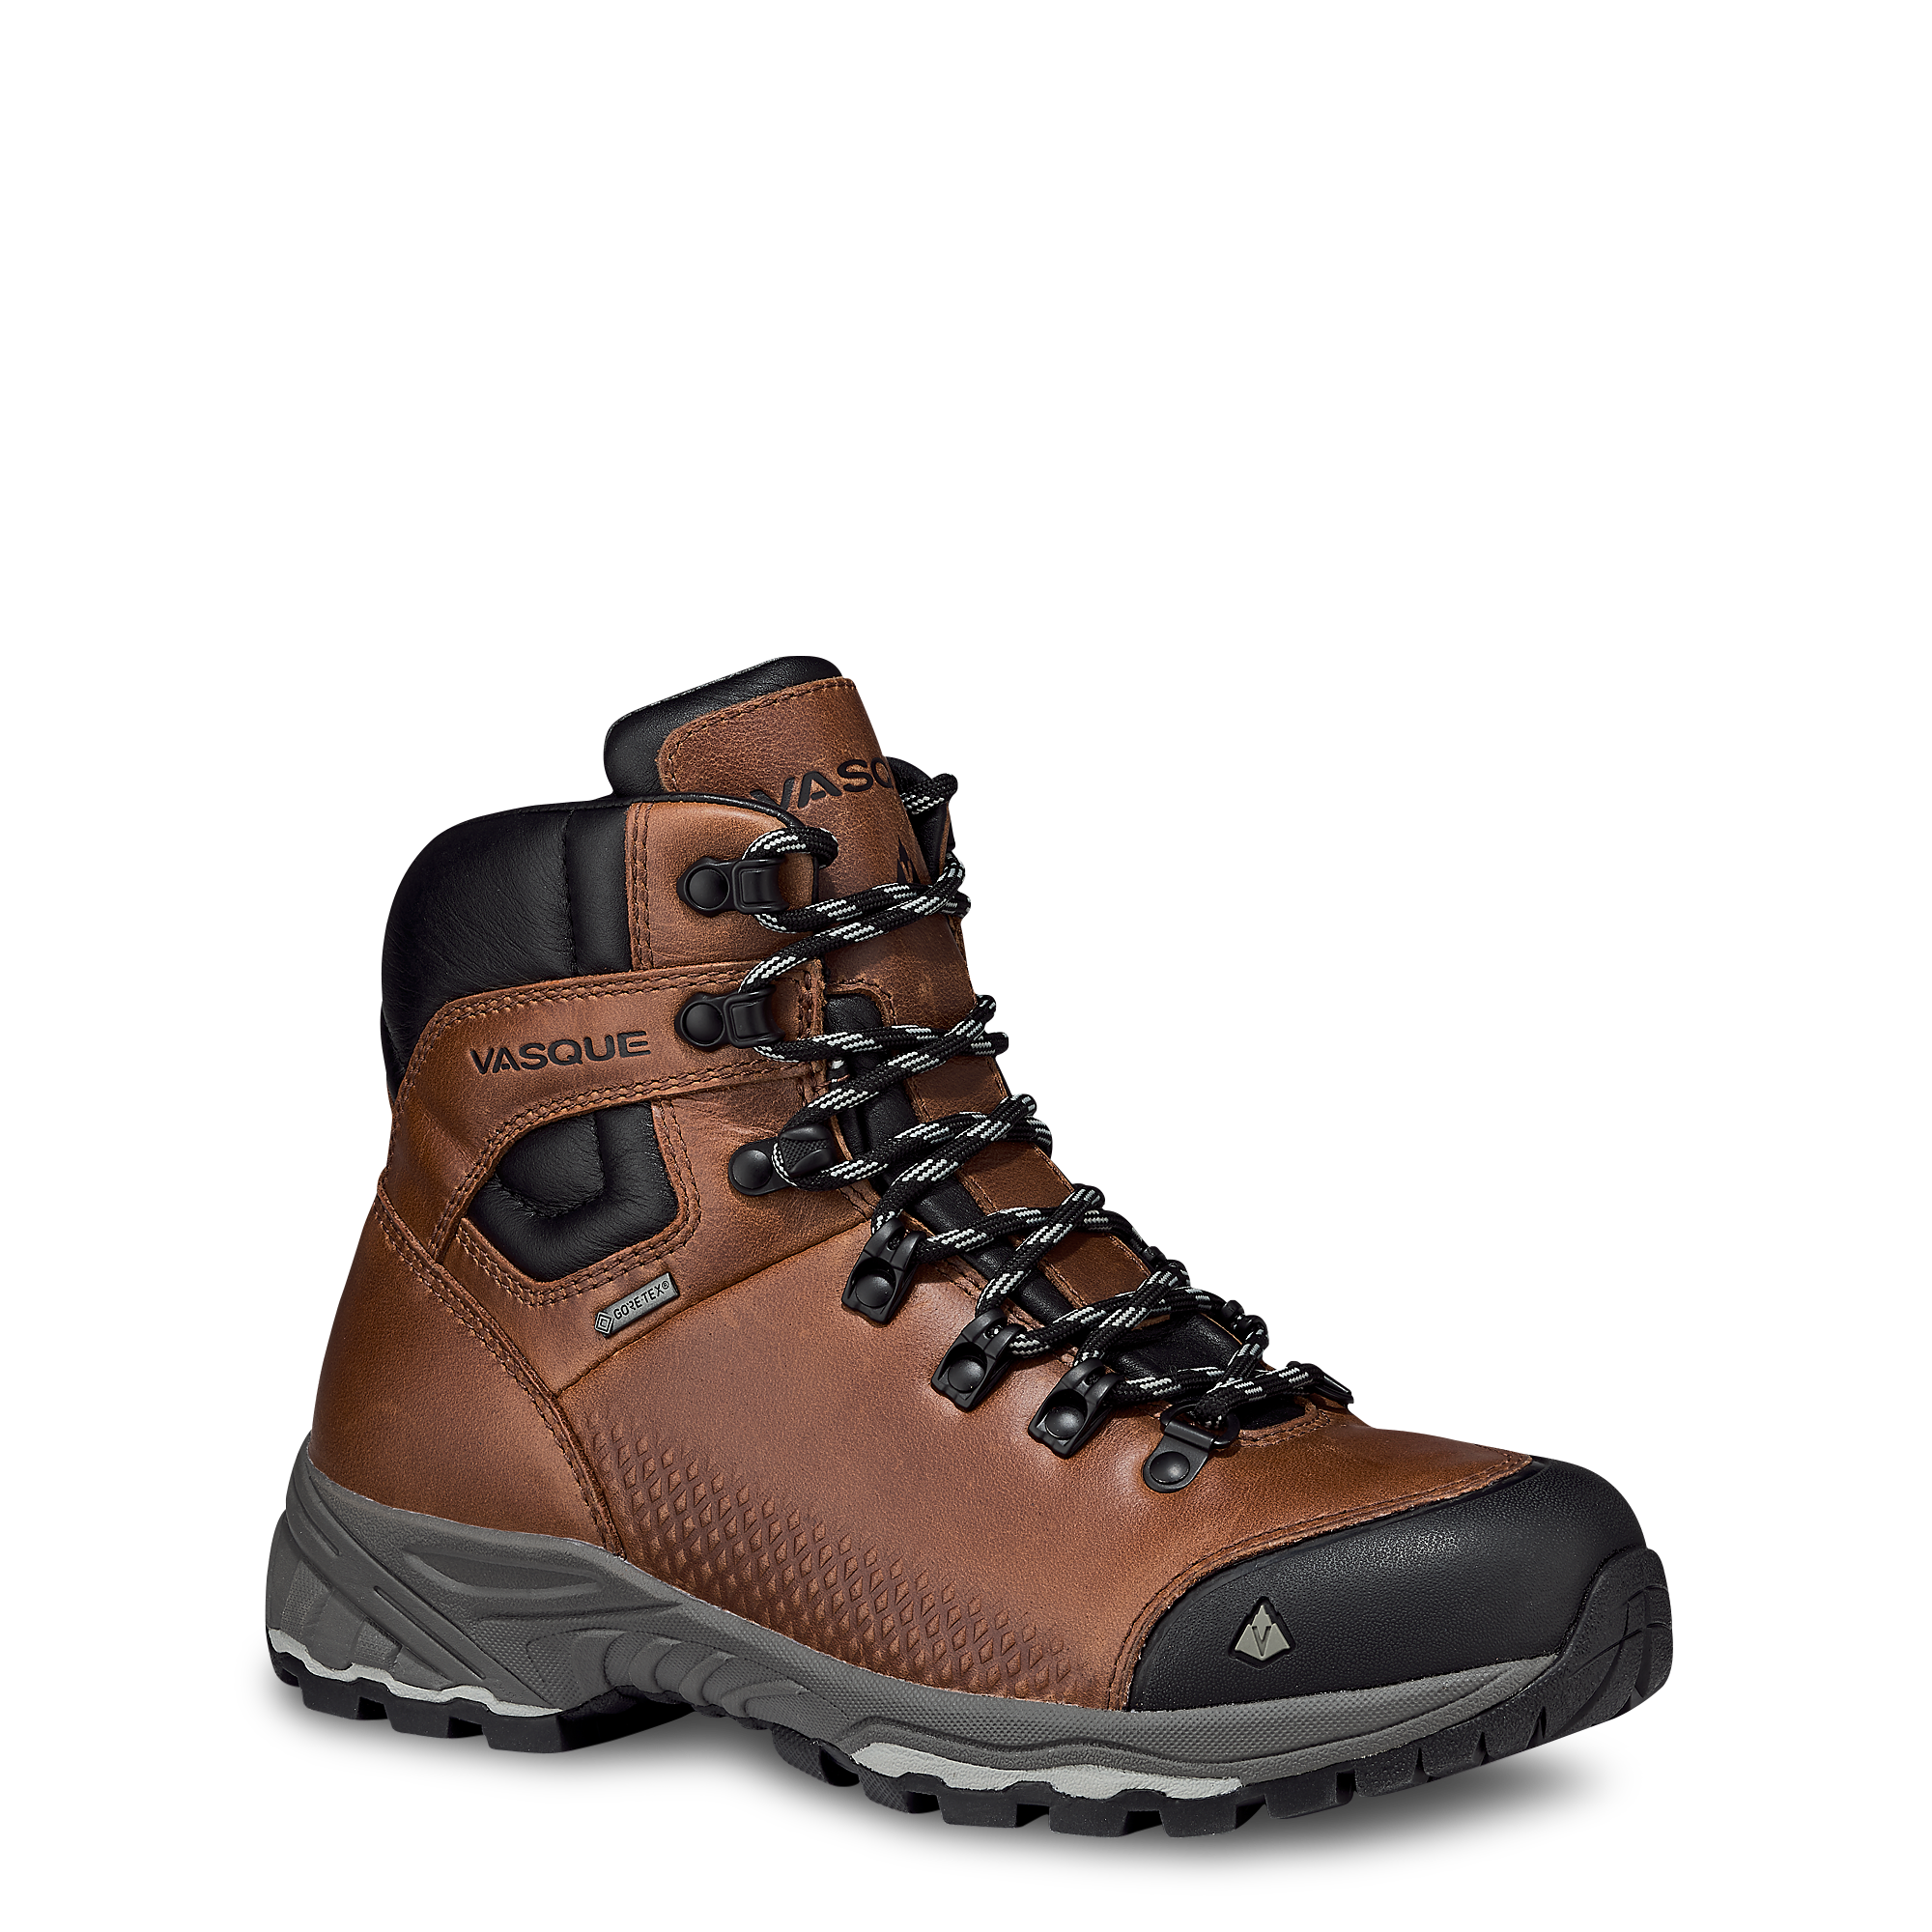 Vasque St. Elias FG GTX Waterproof Hiking Boots for Ladies - Cognac - 6.5M